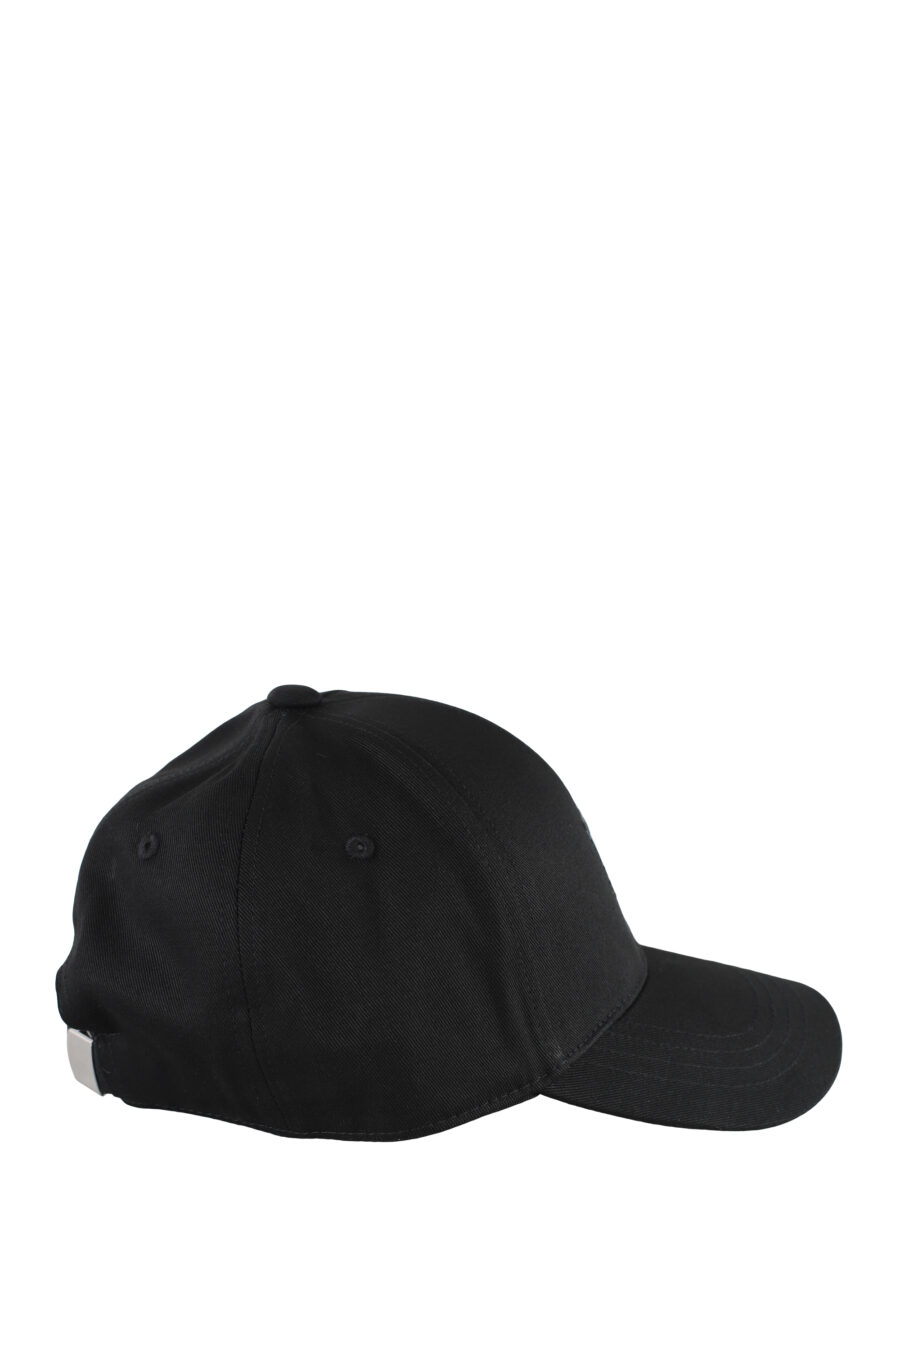 Gorra negra con logo mini "lux identity" blanco - IMG 5154